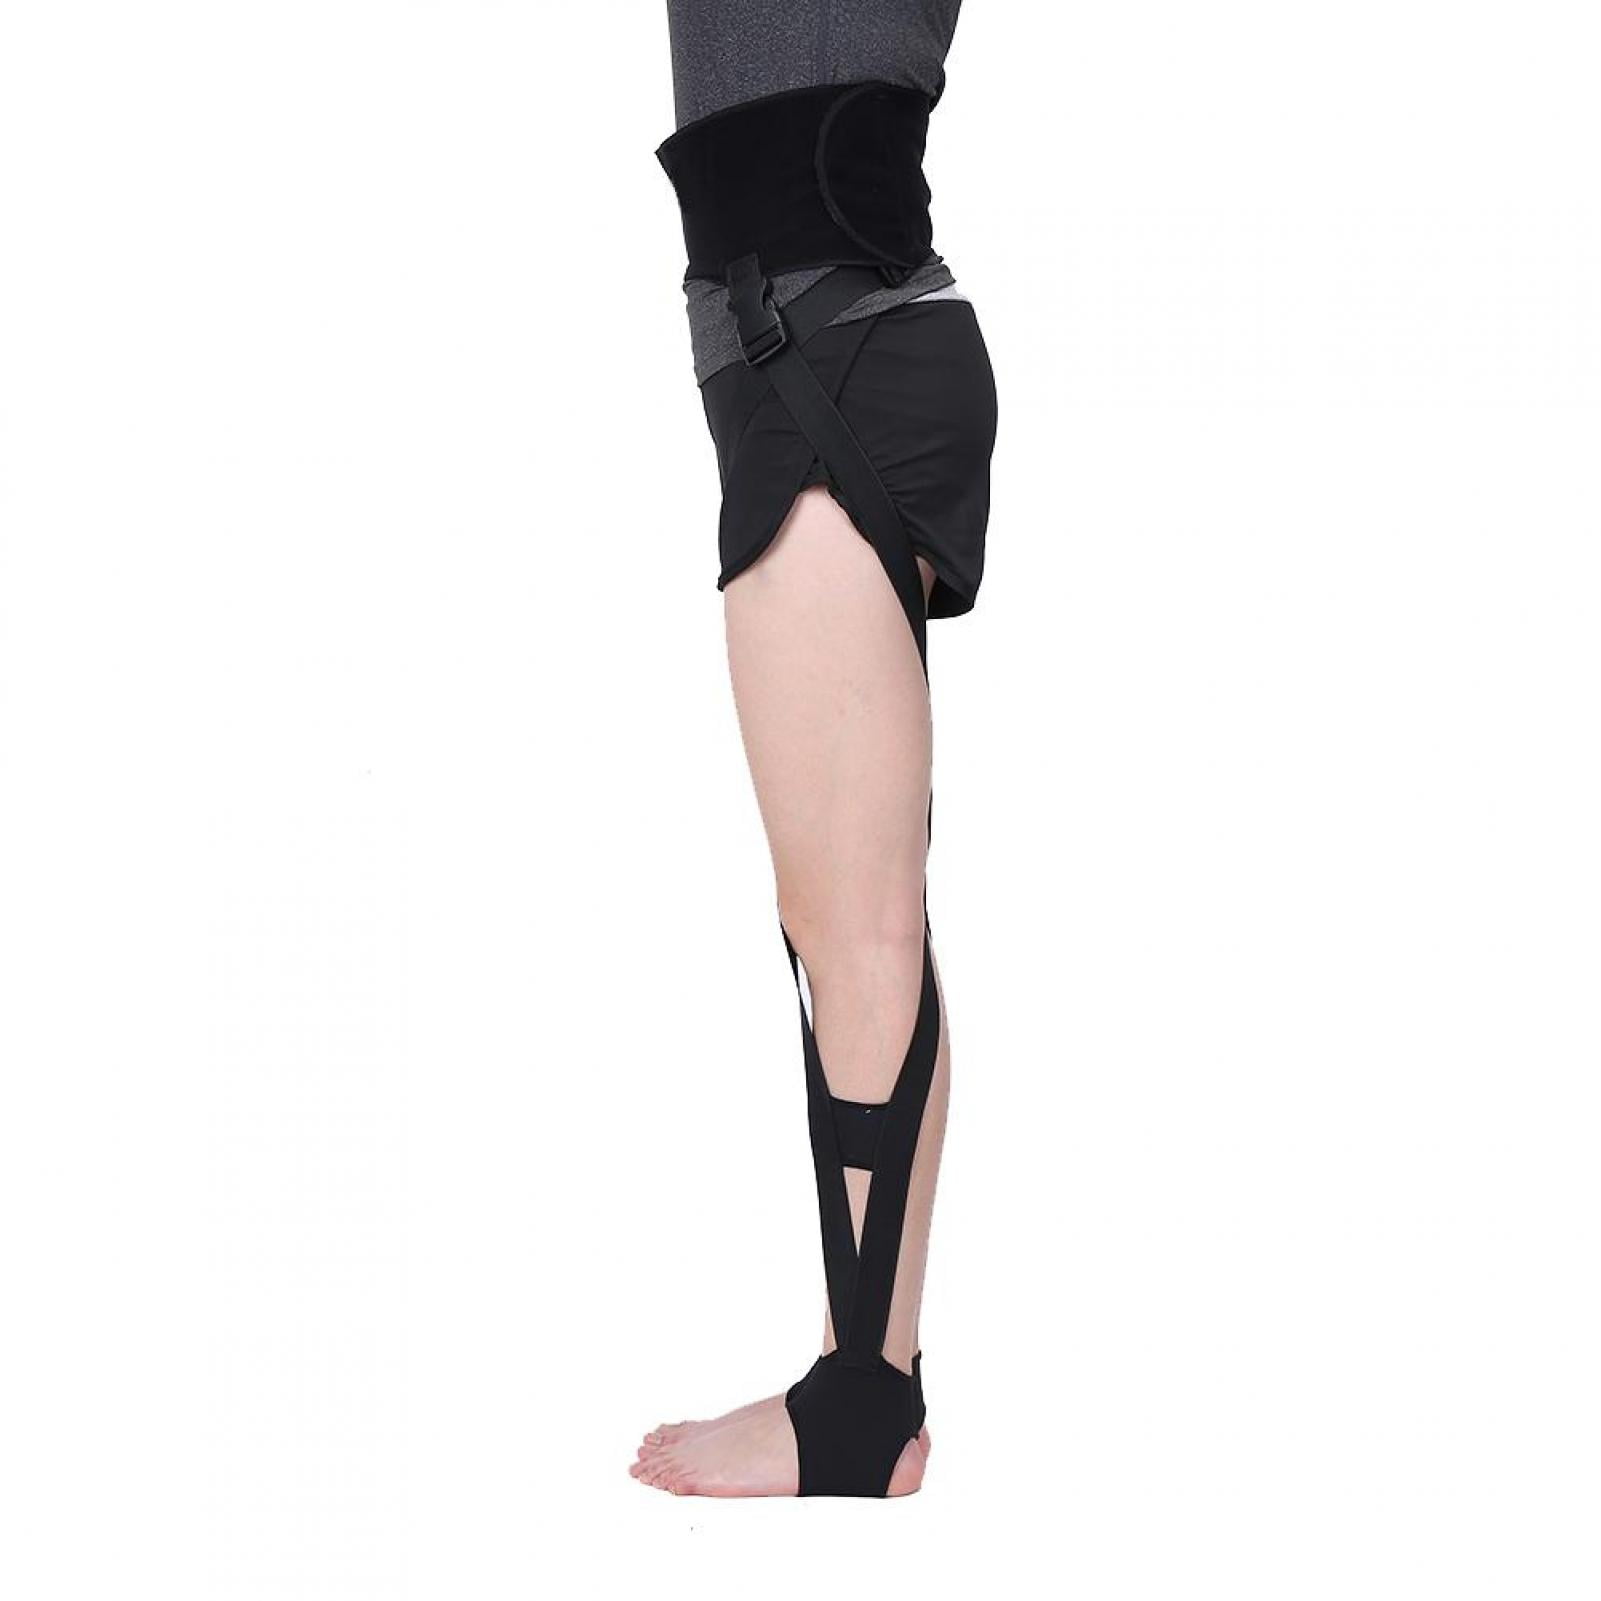 DOACT O/X Bowed Legs Knock Knees Straightening Correction Belt Band Bandage  S/M/L TL 